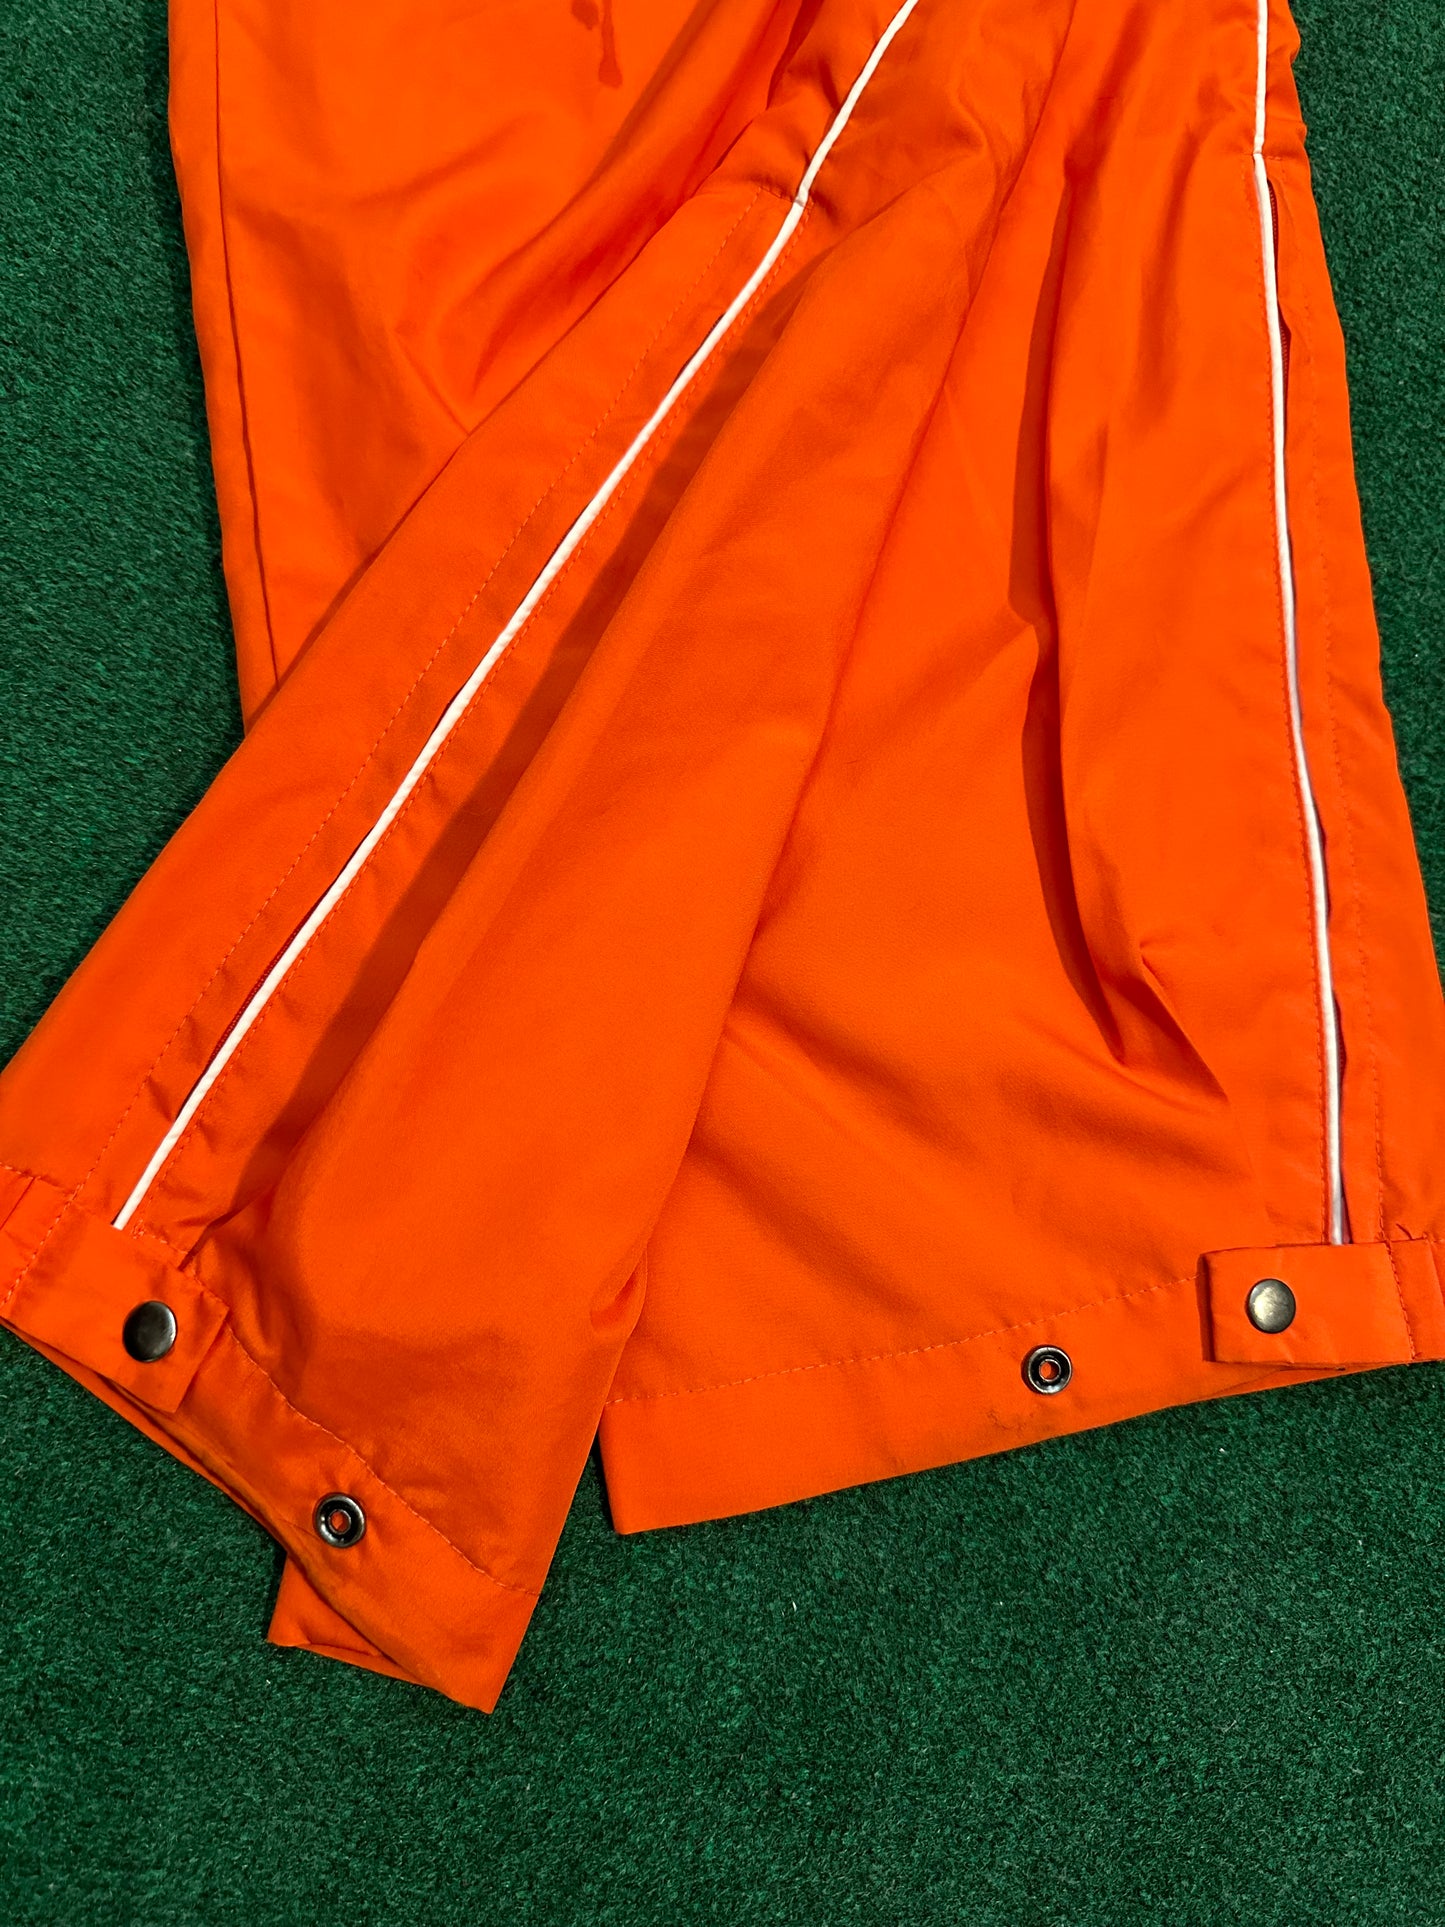 Vintage Augusta Sportswear Track Pants